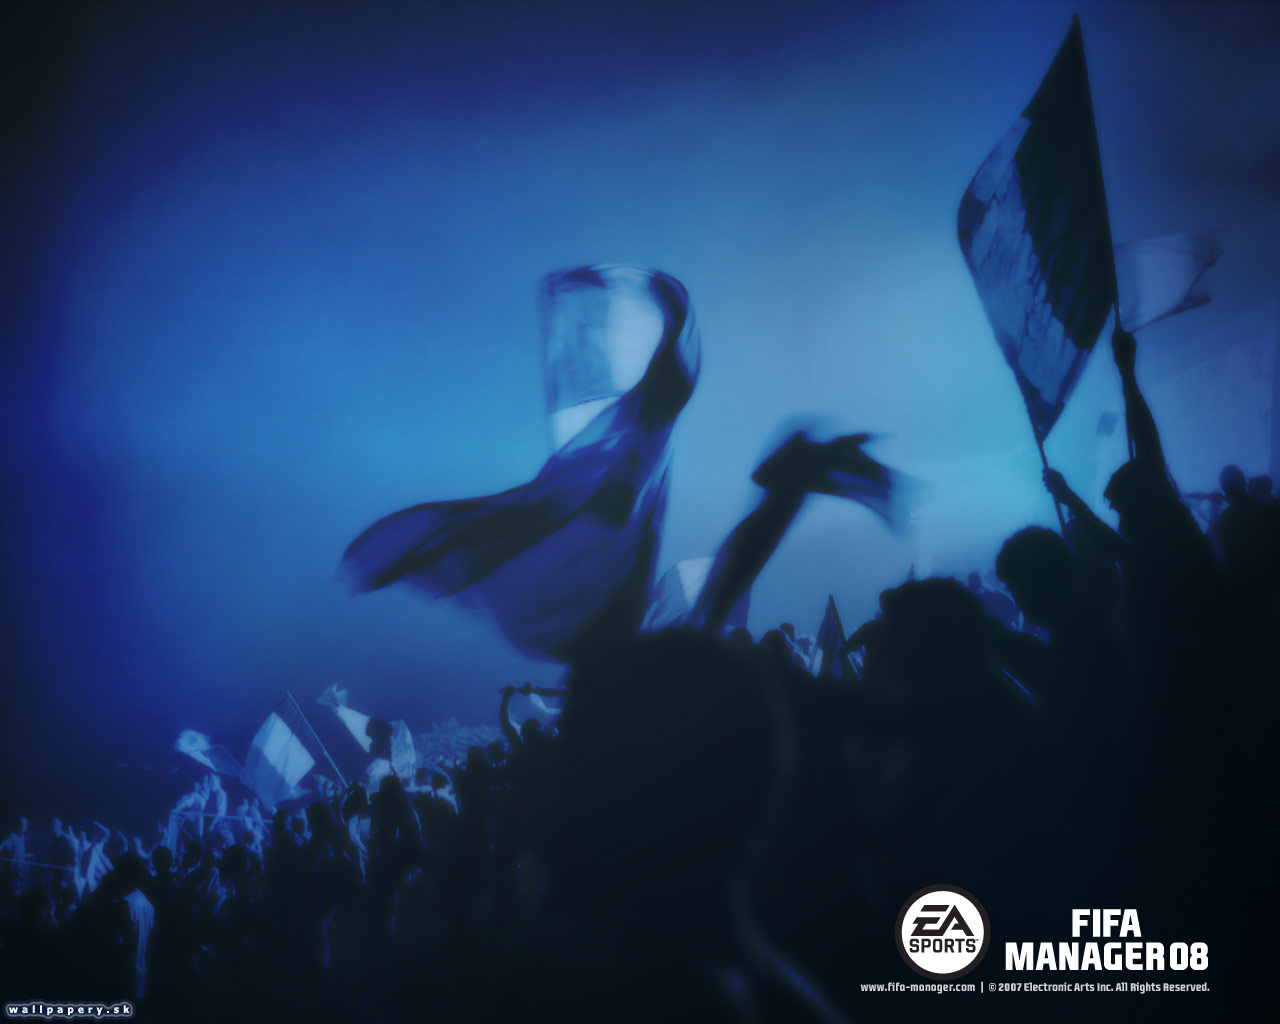 FIFA Manager 08 - wallpaper 2